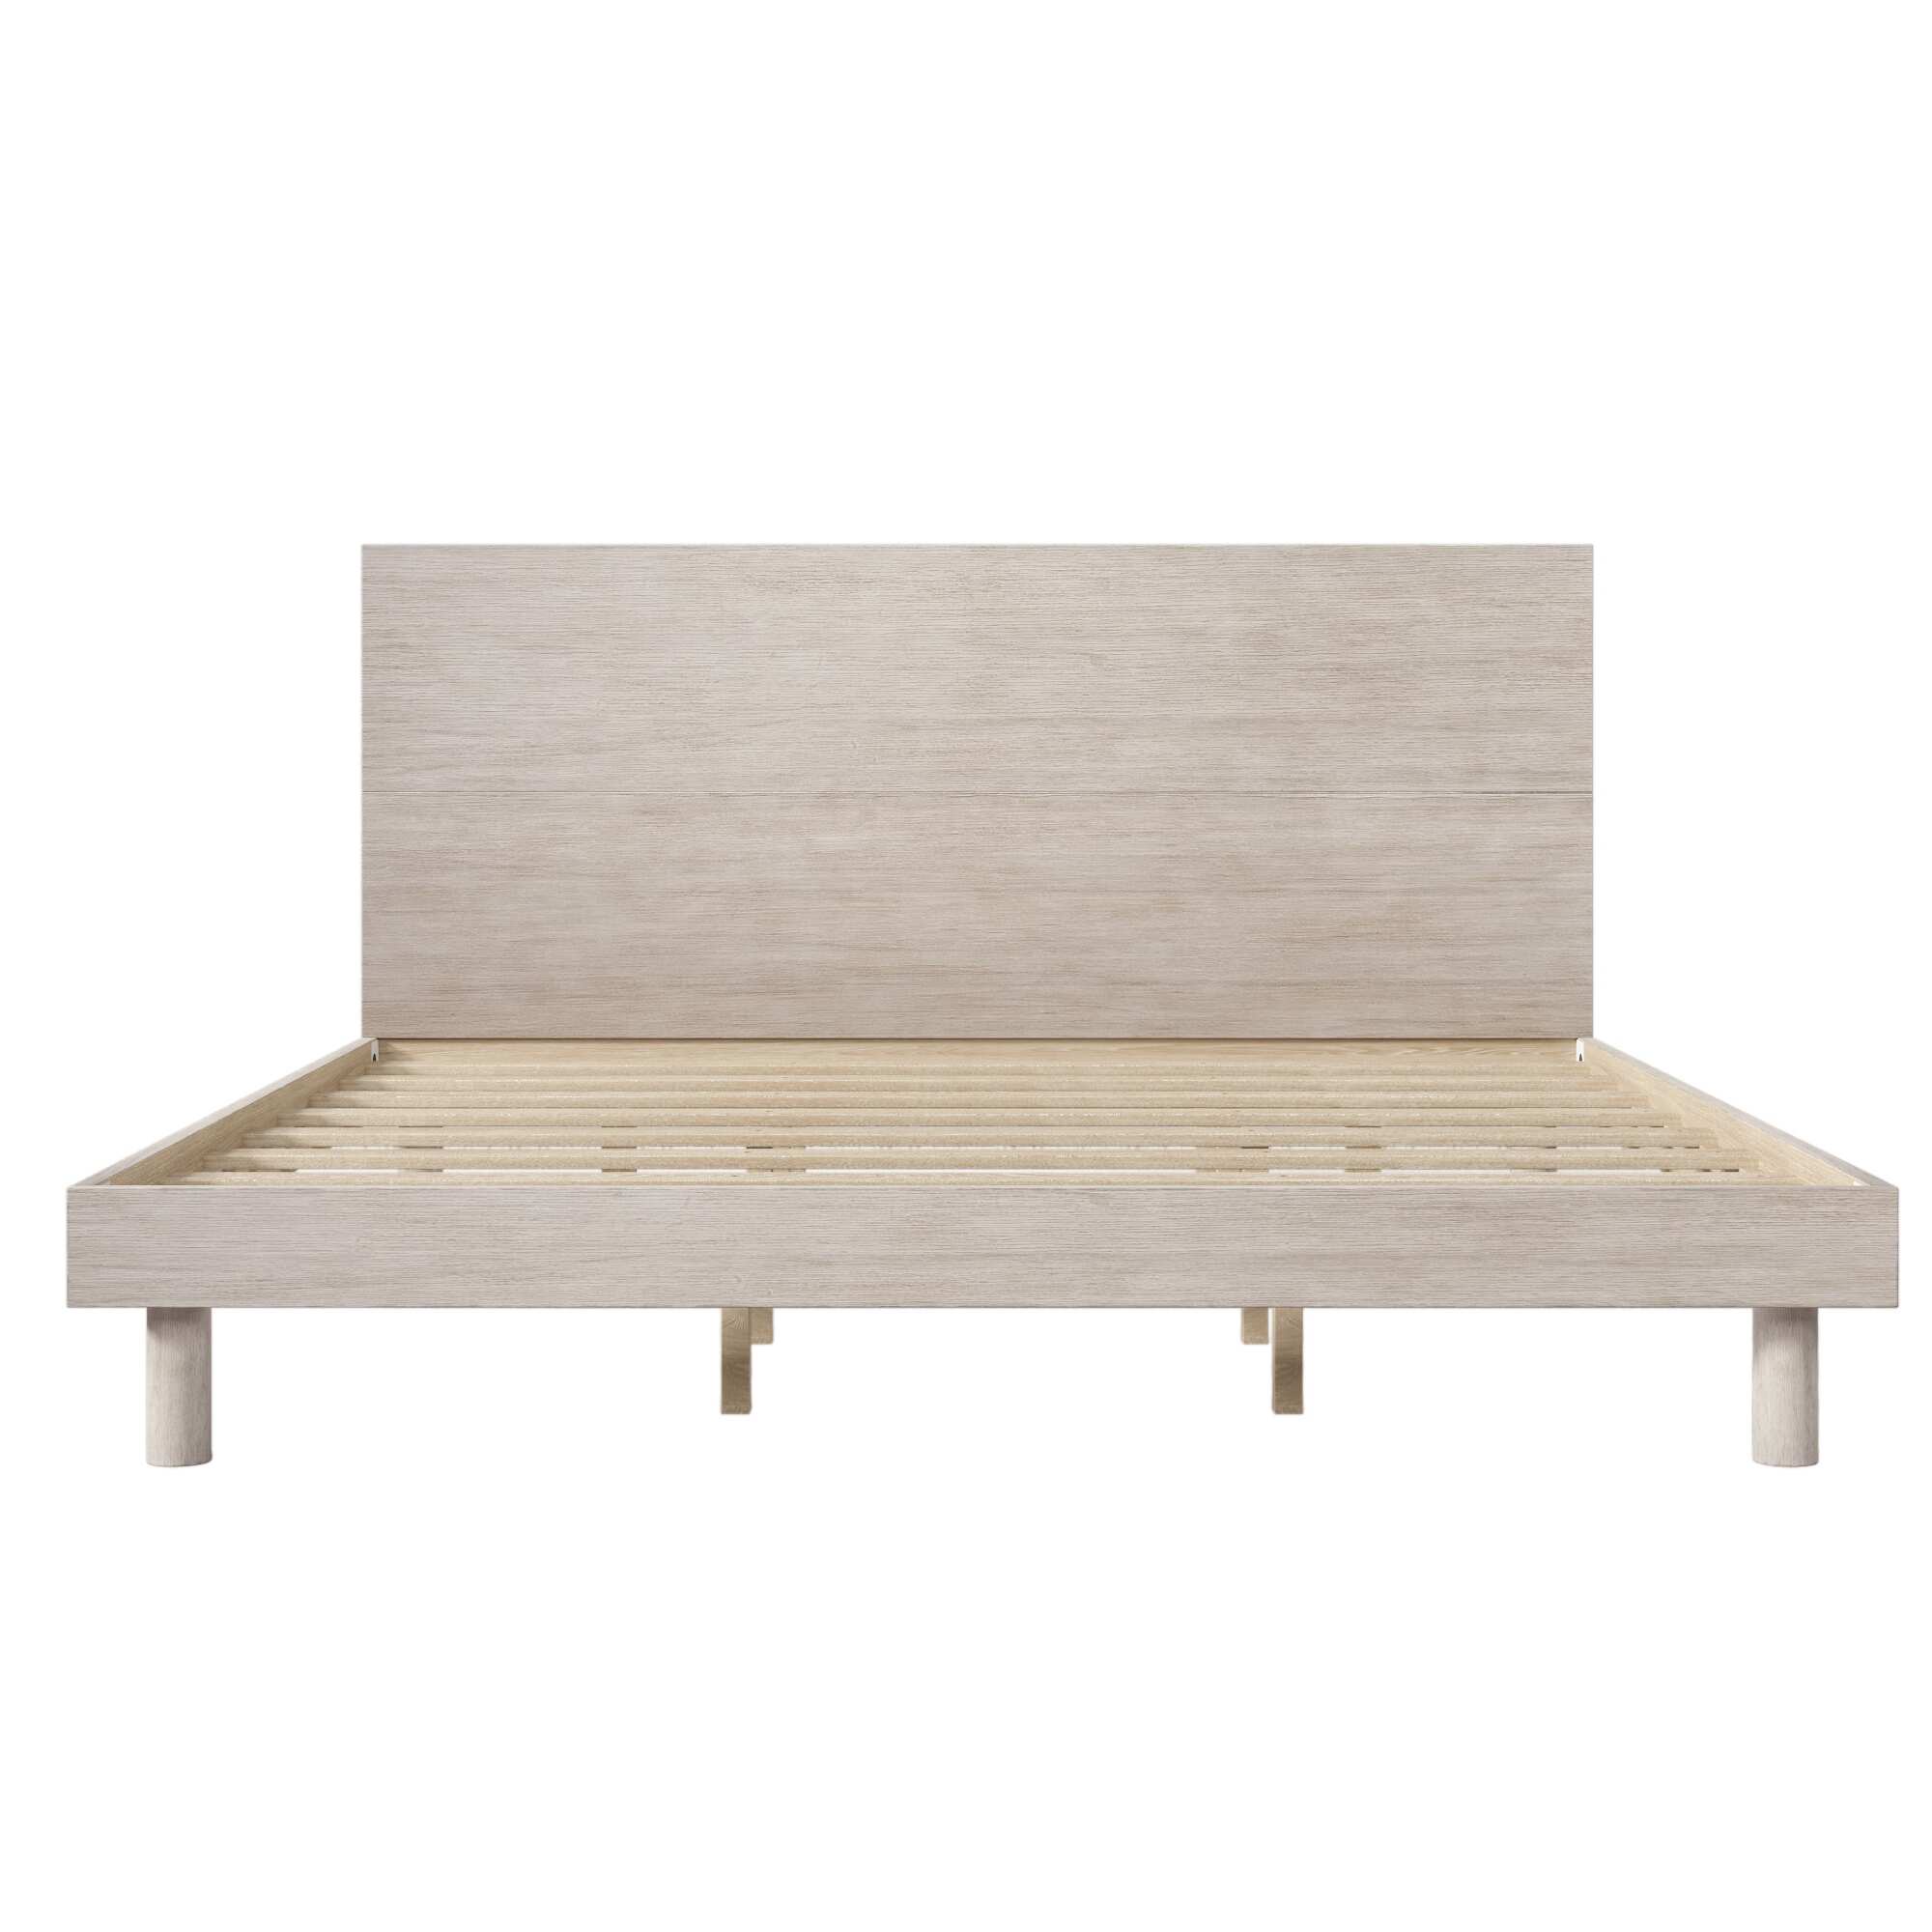 King Size Platform Bed, Modern Platform Bed Frame with Solid Wood Grain Headboard, 8 Wooden Slats Support, No Box Spring Needed